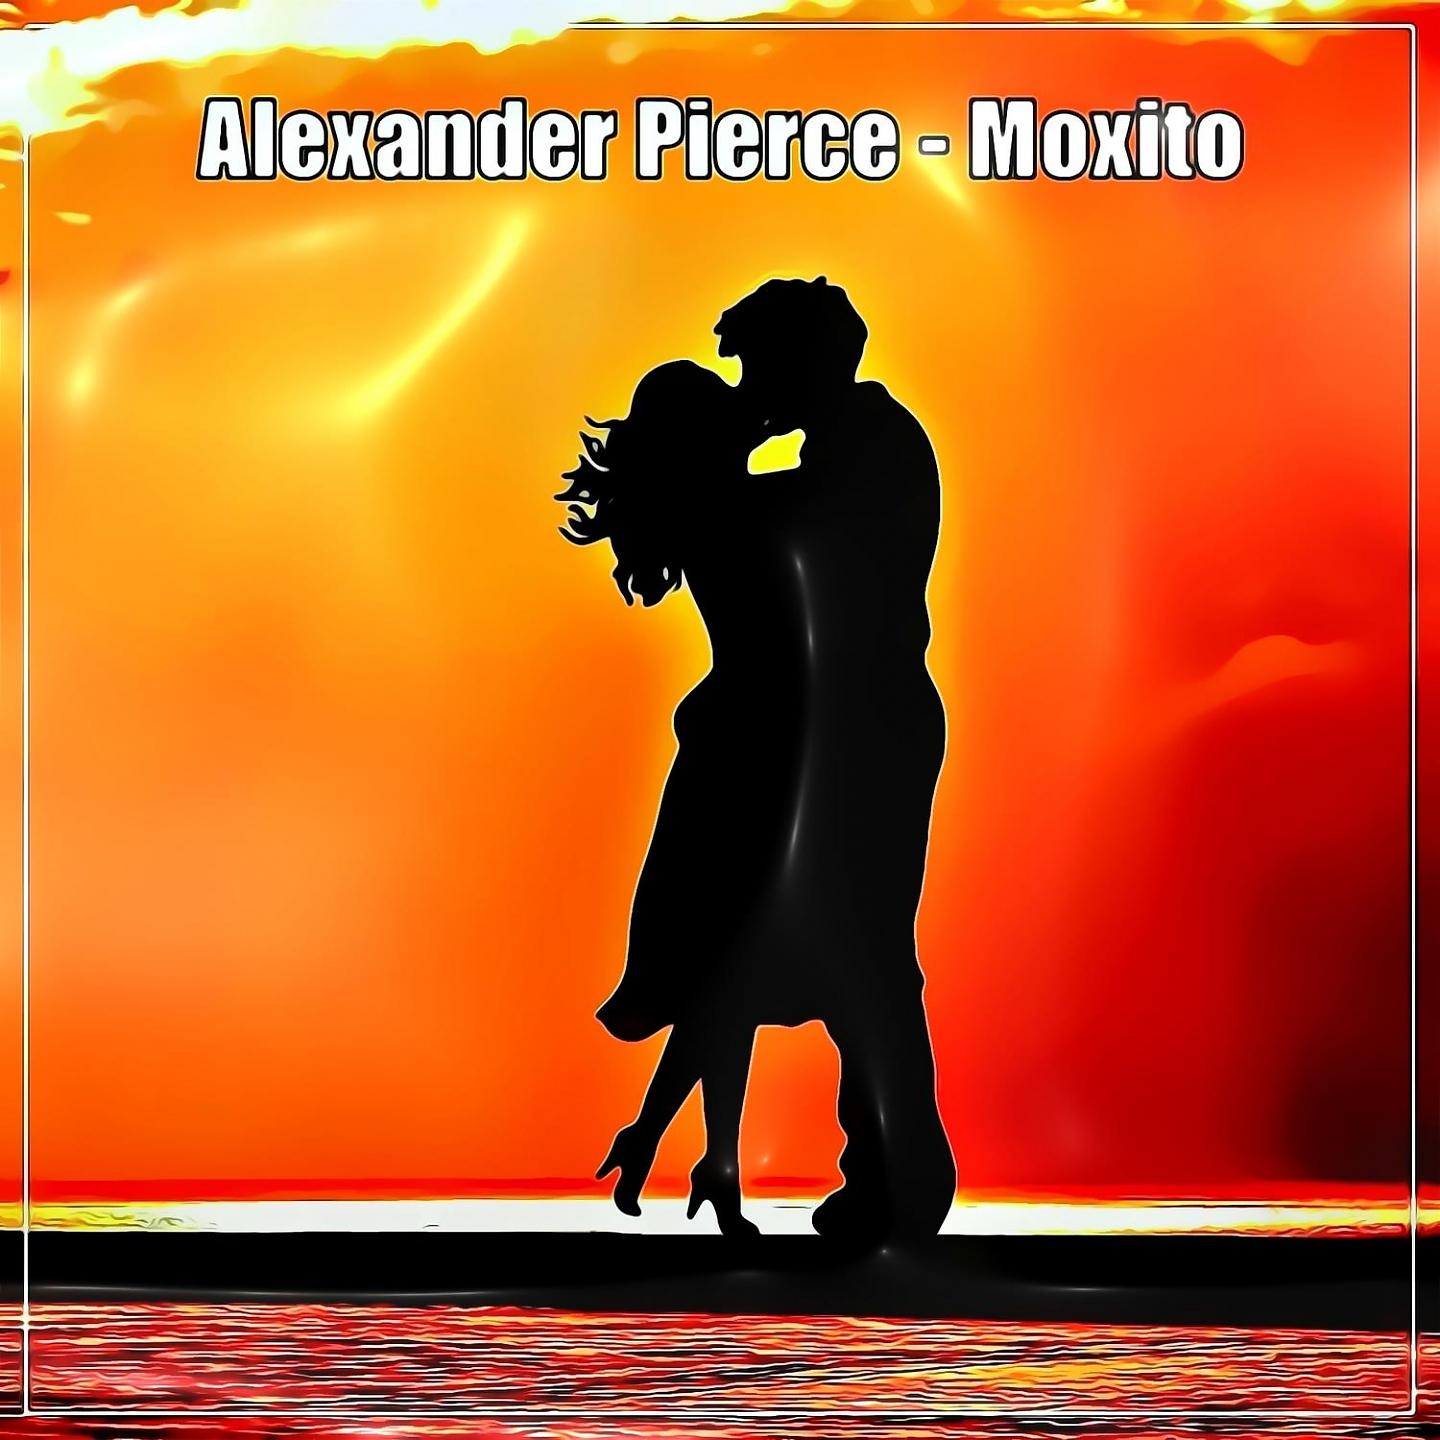 Alexander pierce adil. Alexander Pierce Remix. Over Platon Joolay Alexander Pierce Remix слушать. Album Art Music Alexander Pierce - Moxito. Alexander Pierce ты рядом.